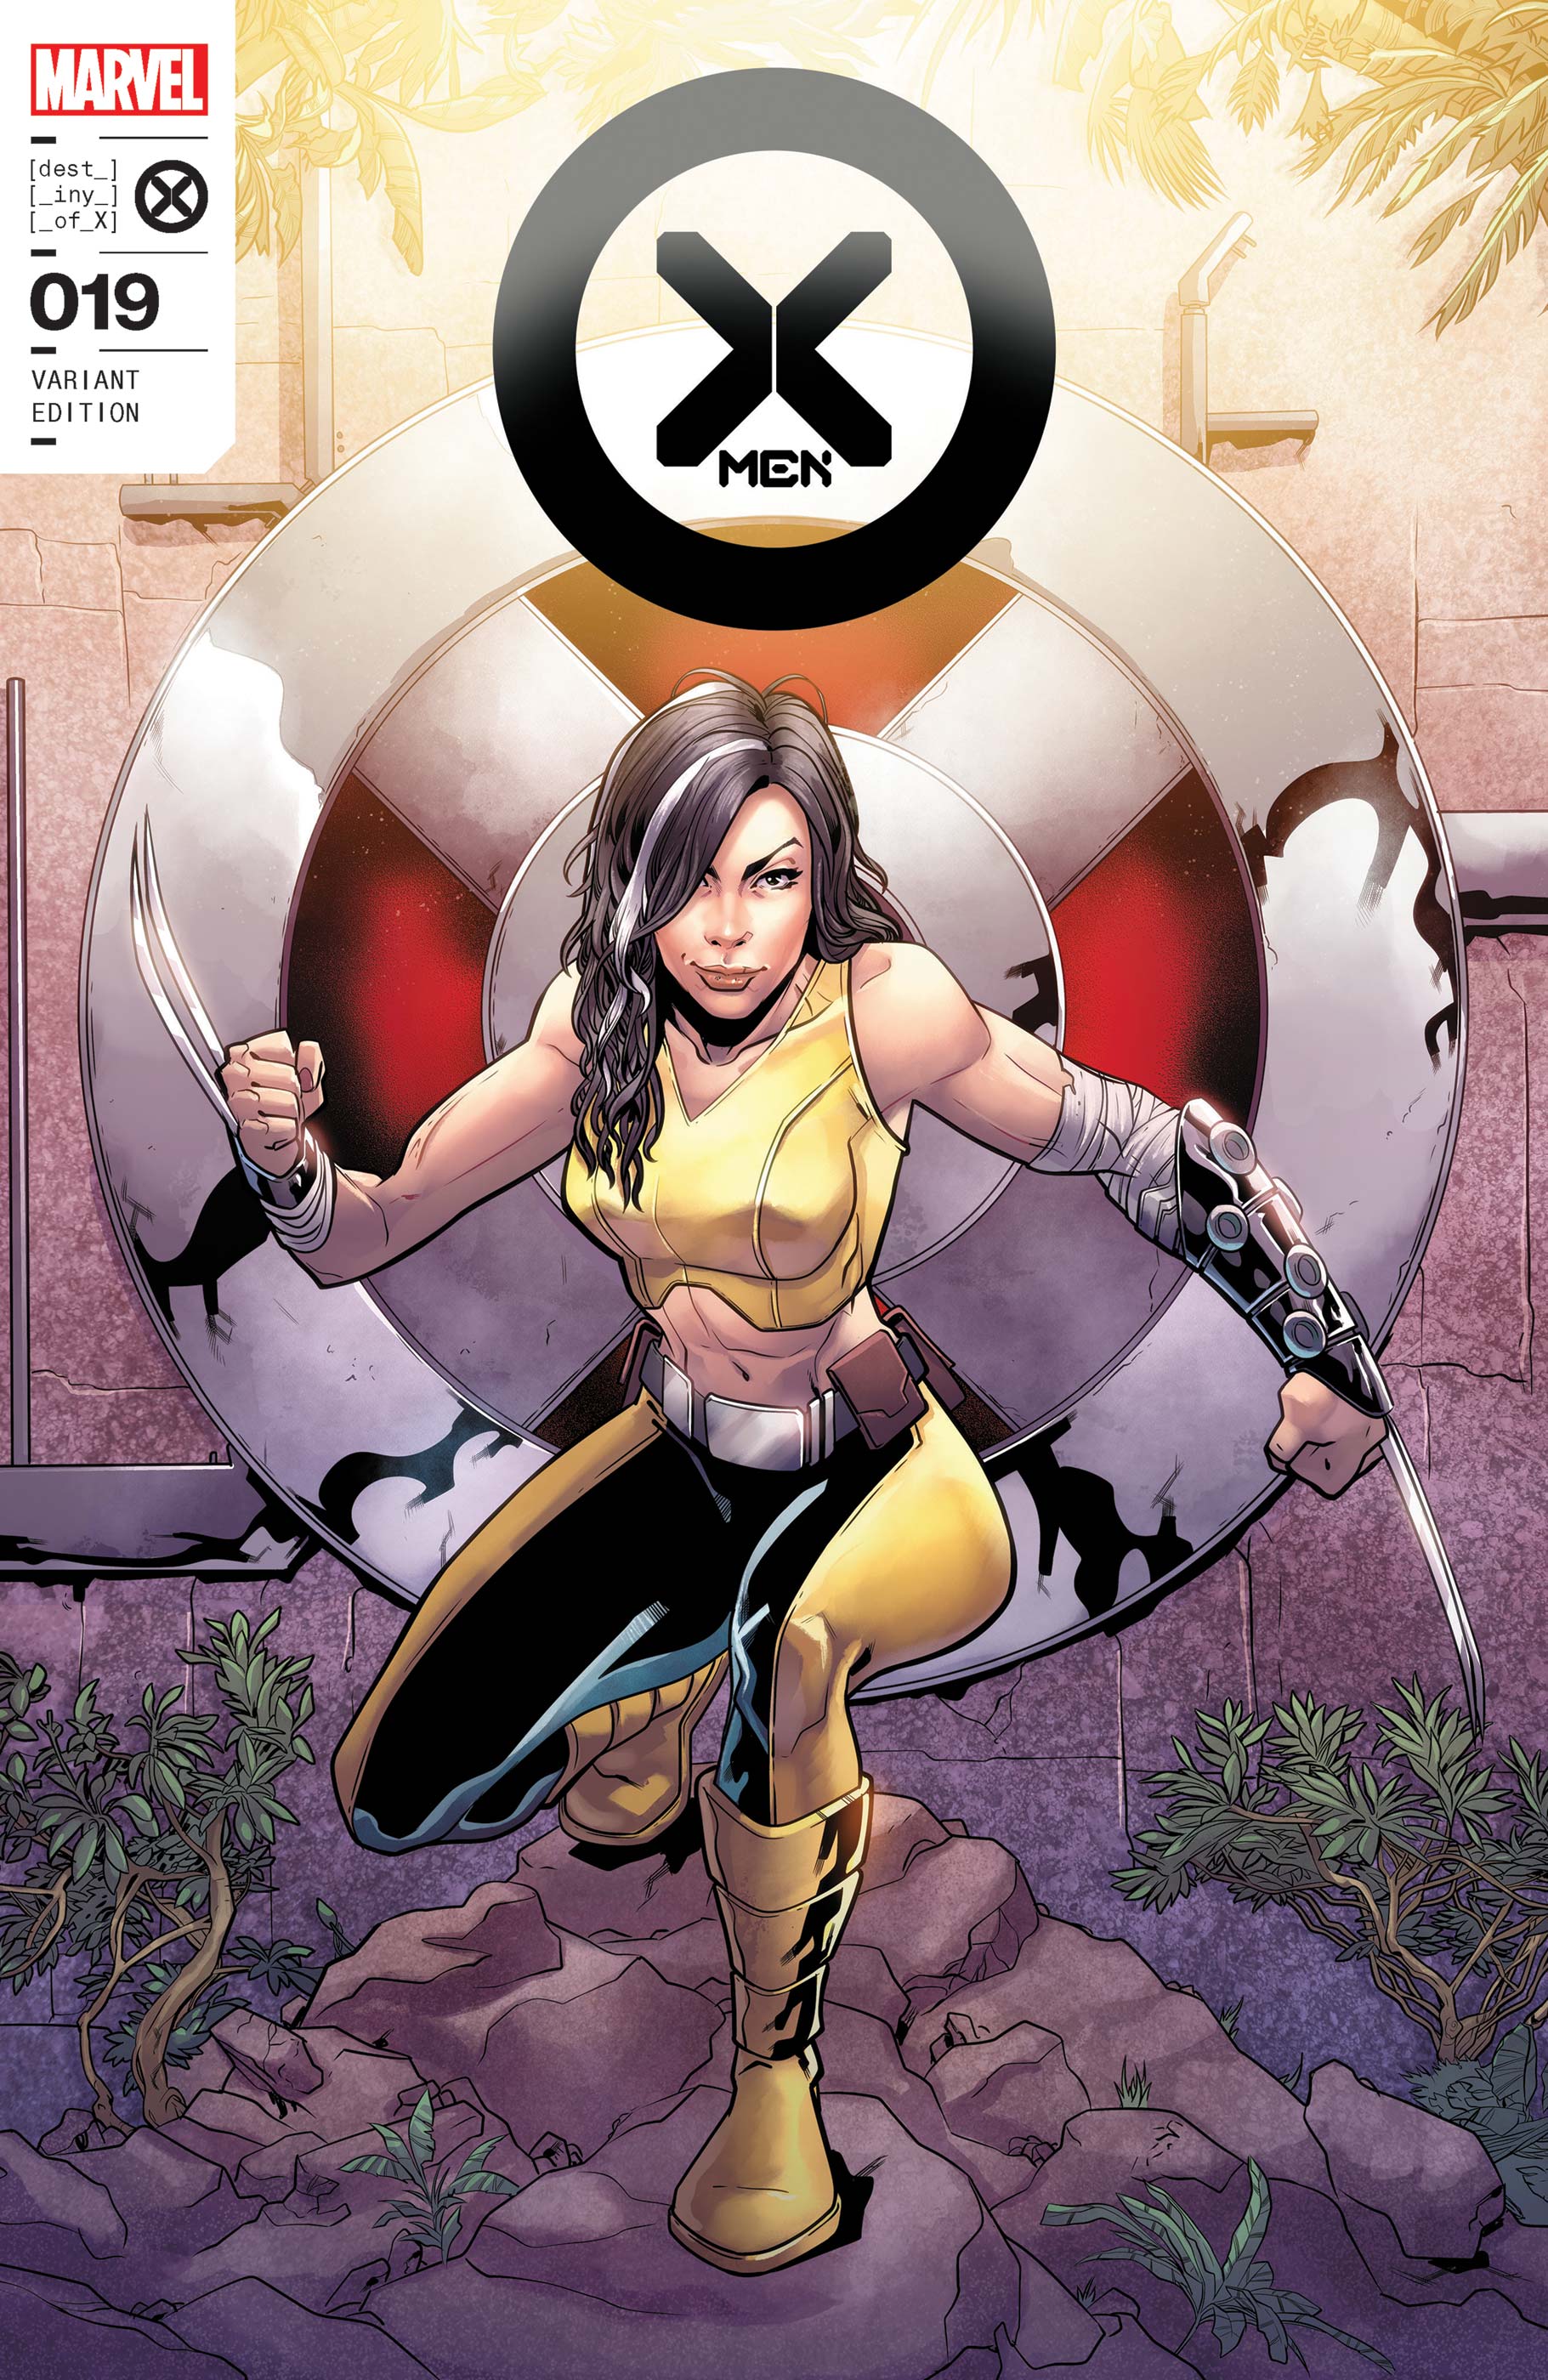 X-Men (2021) #19 (Variant)